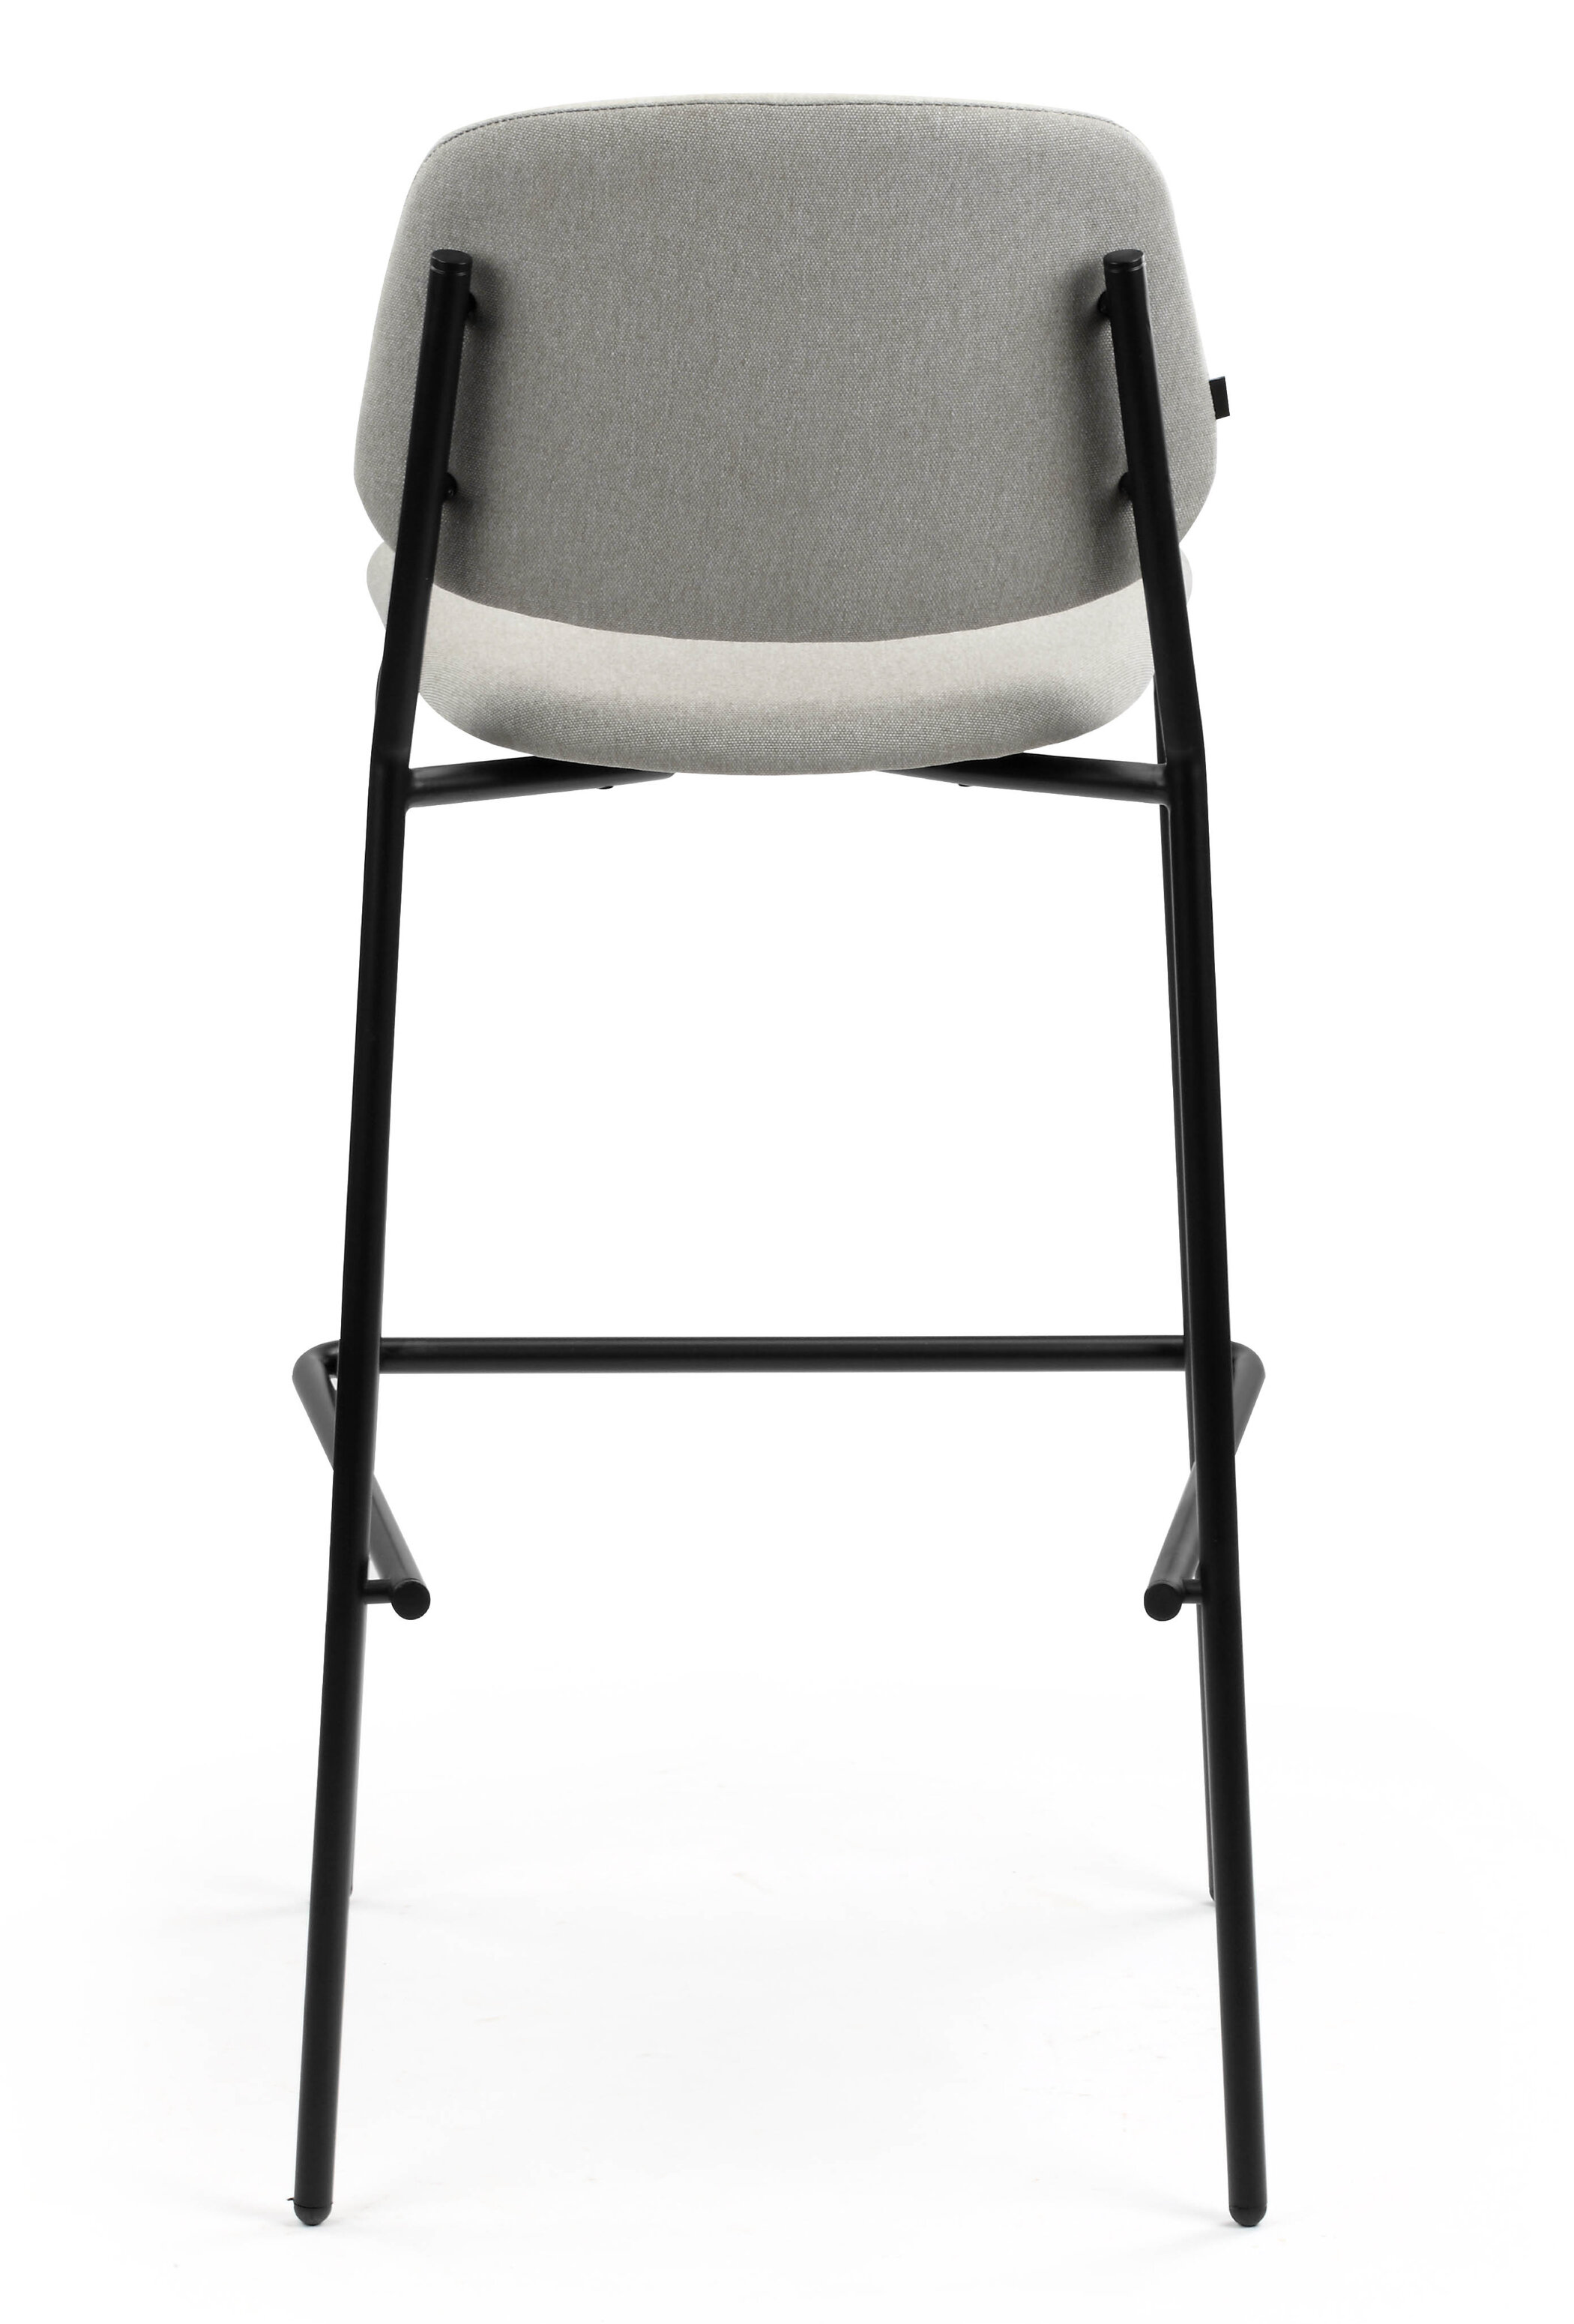 WS - Platform high stool - UPH Grey (Back)